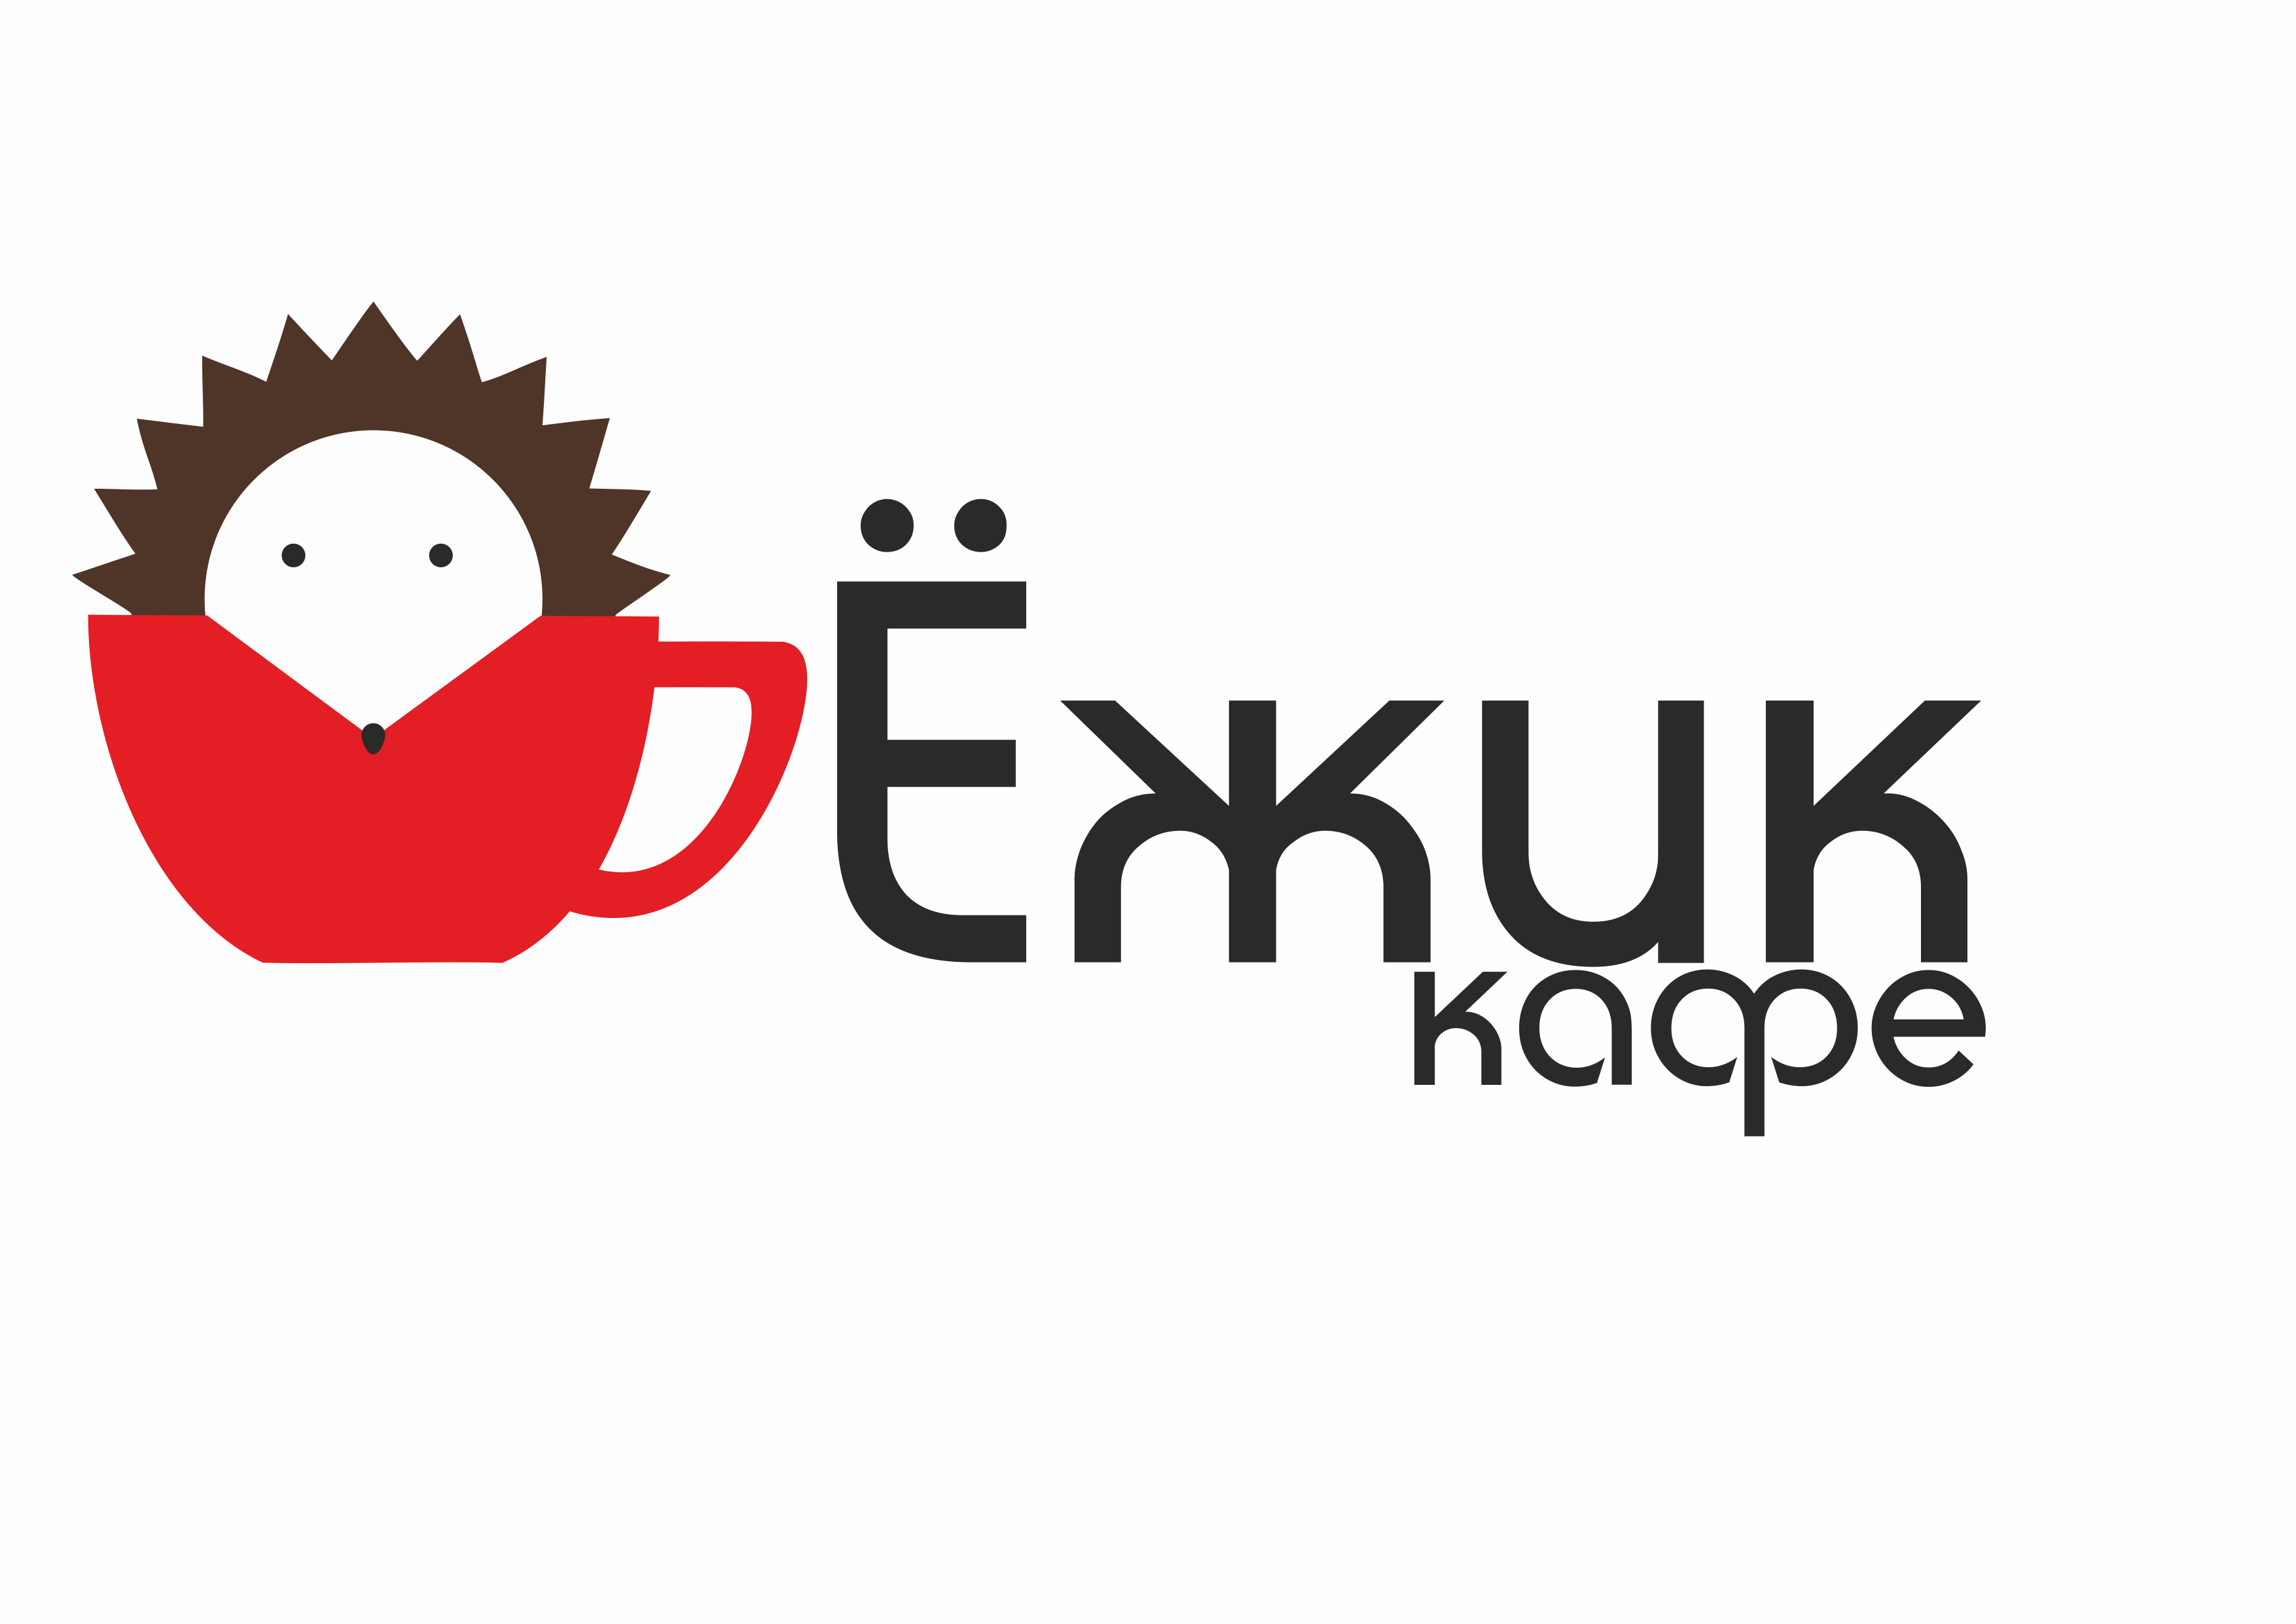 Кофейня ёж логотип. Эмблема Ежик. Ejik логотип. Ресторан еж логотип. Кафе ежик и кролик